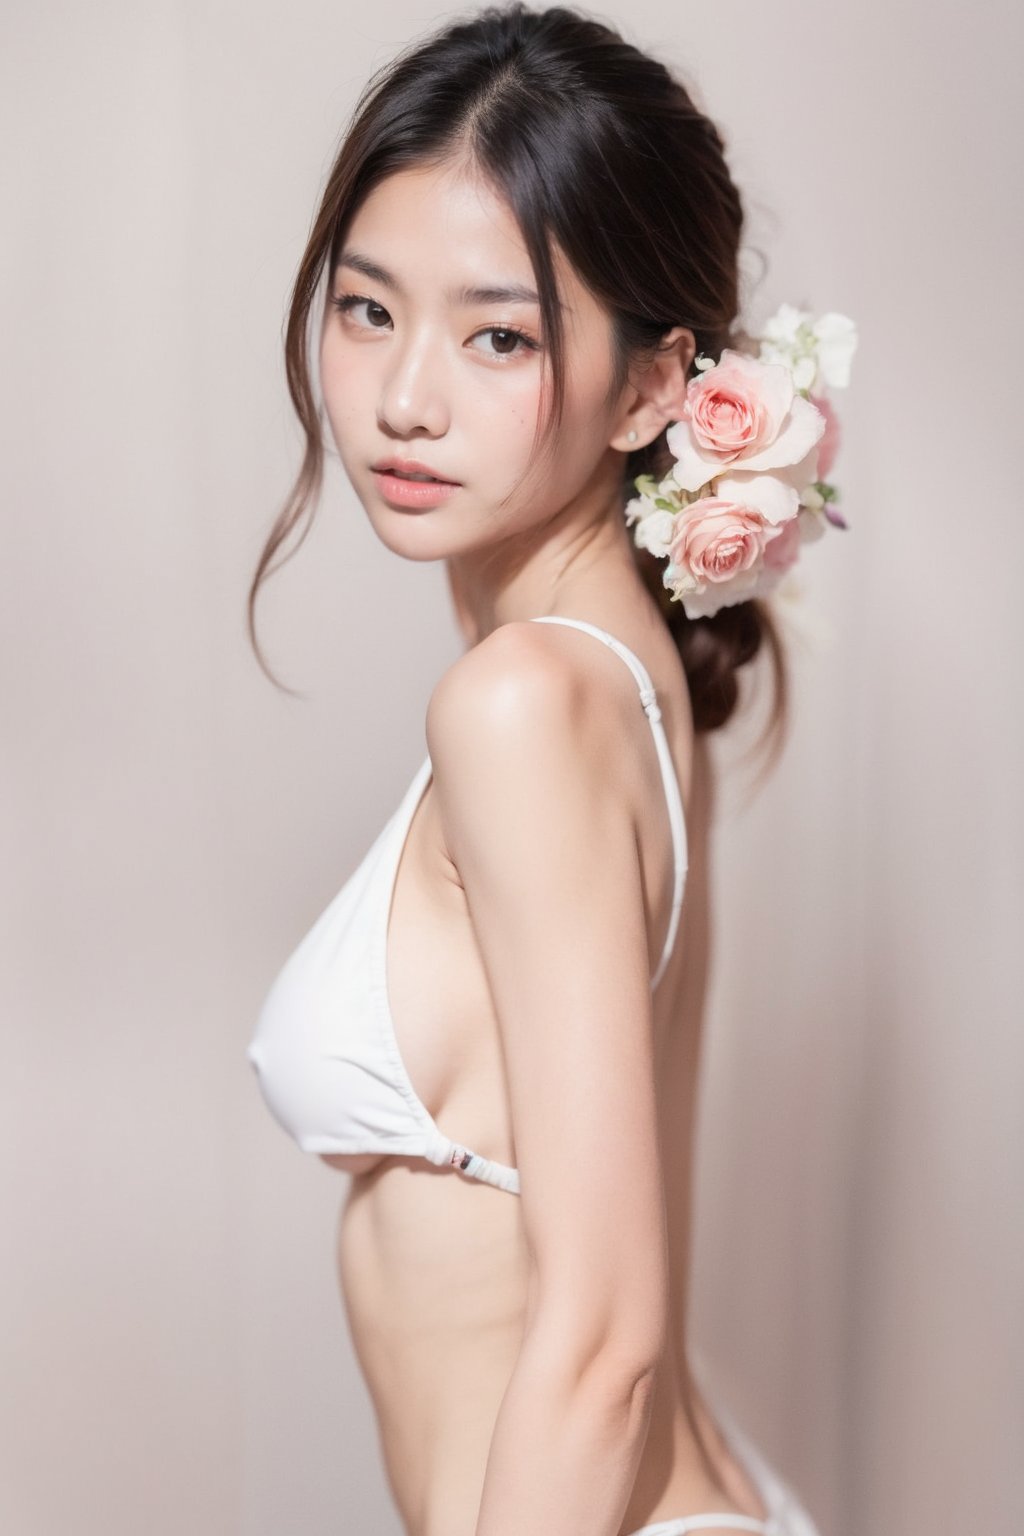 Thai girl, gradient pastel colors bikini model, portrait model, (white rosé background )